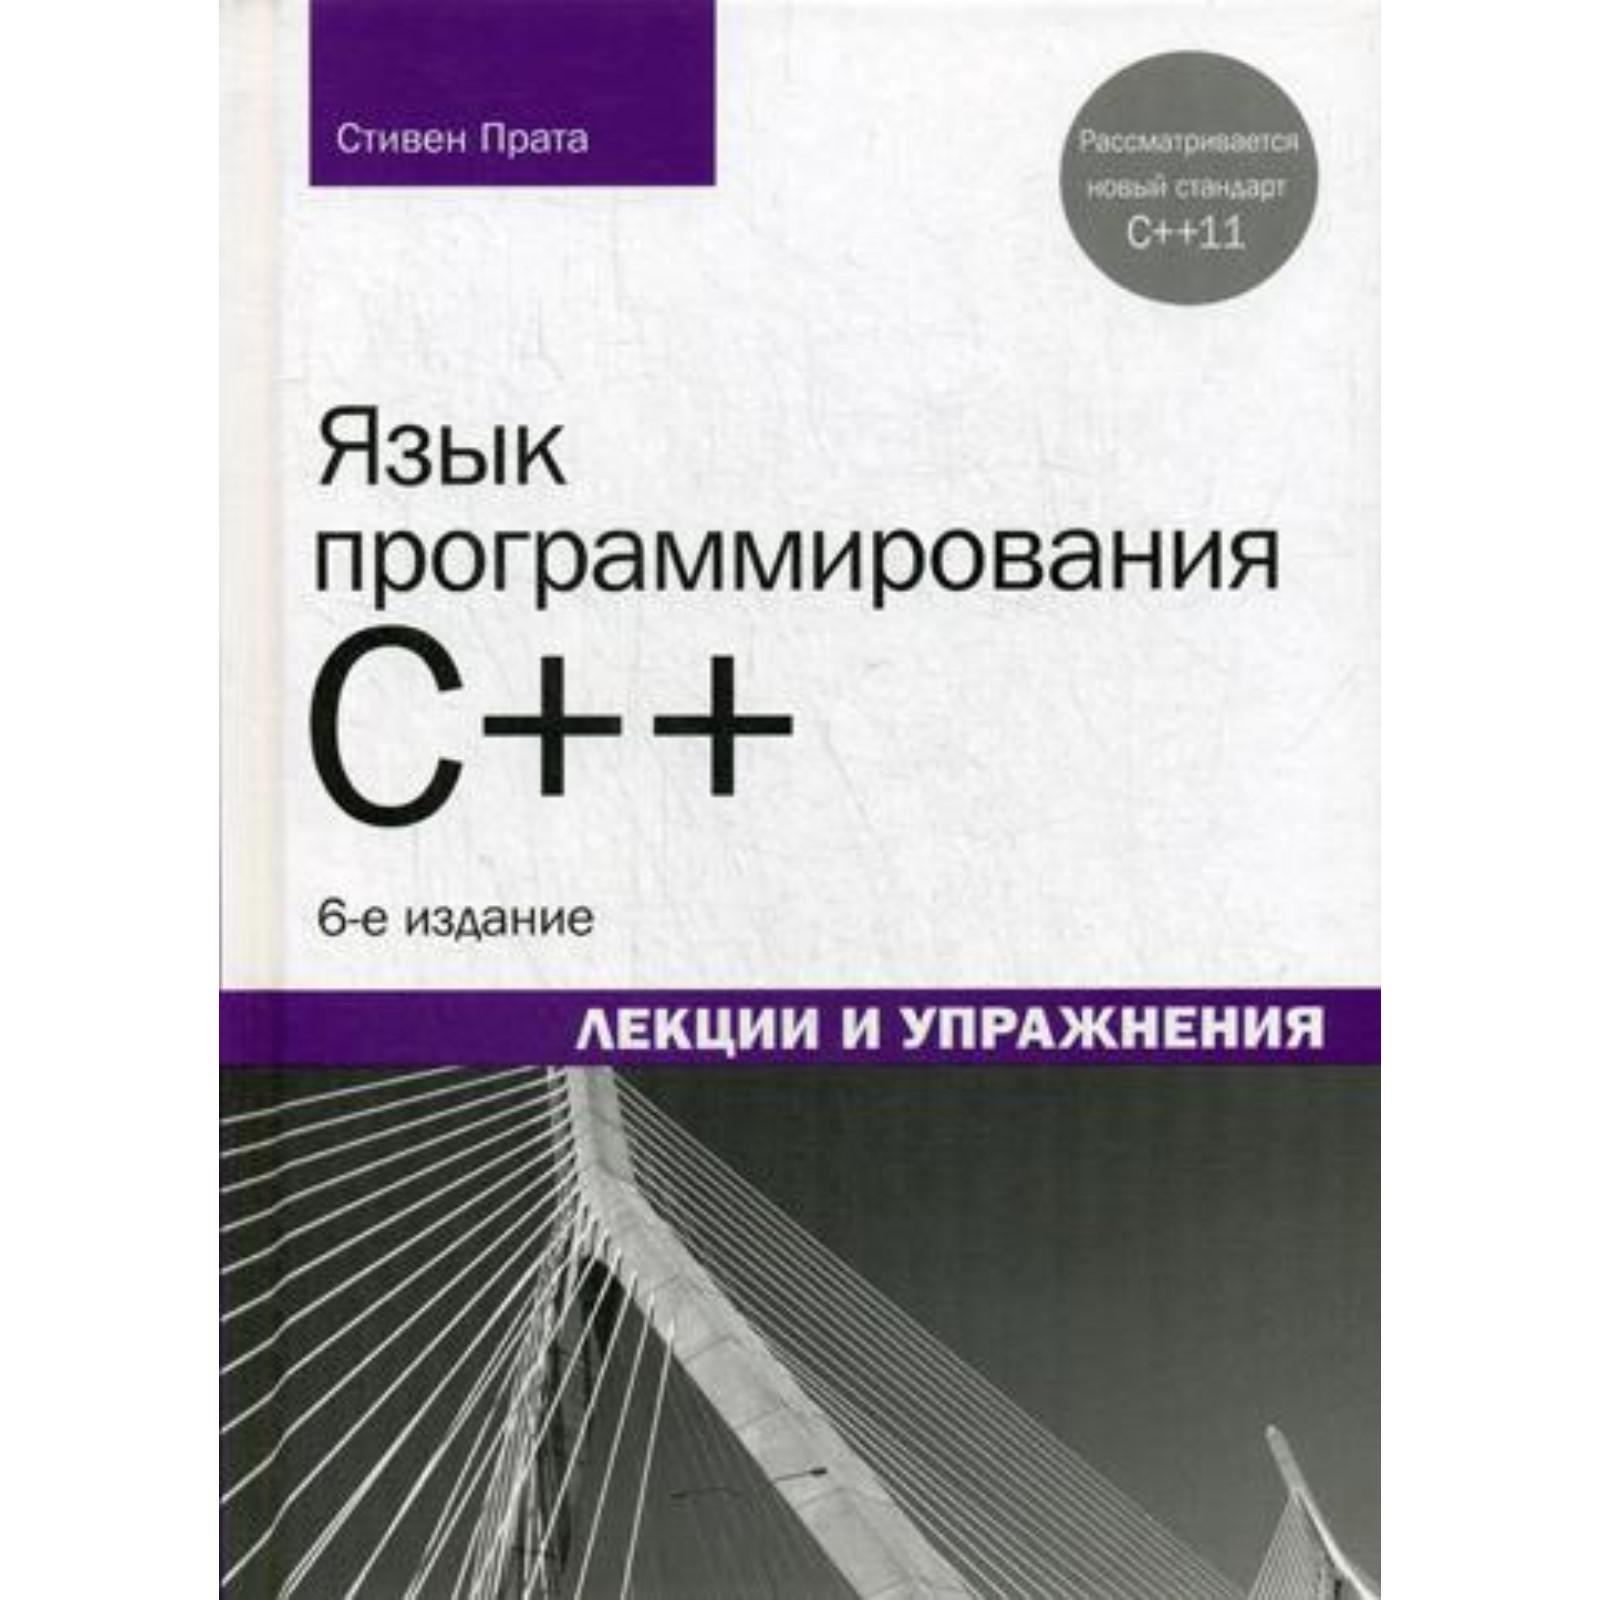 Книга языка c